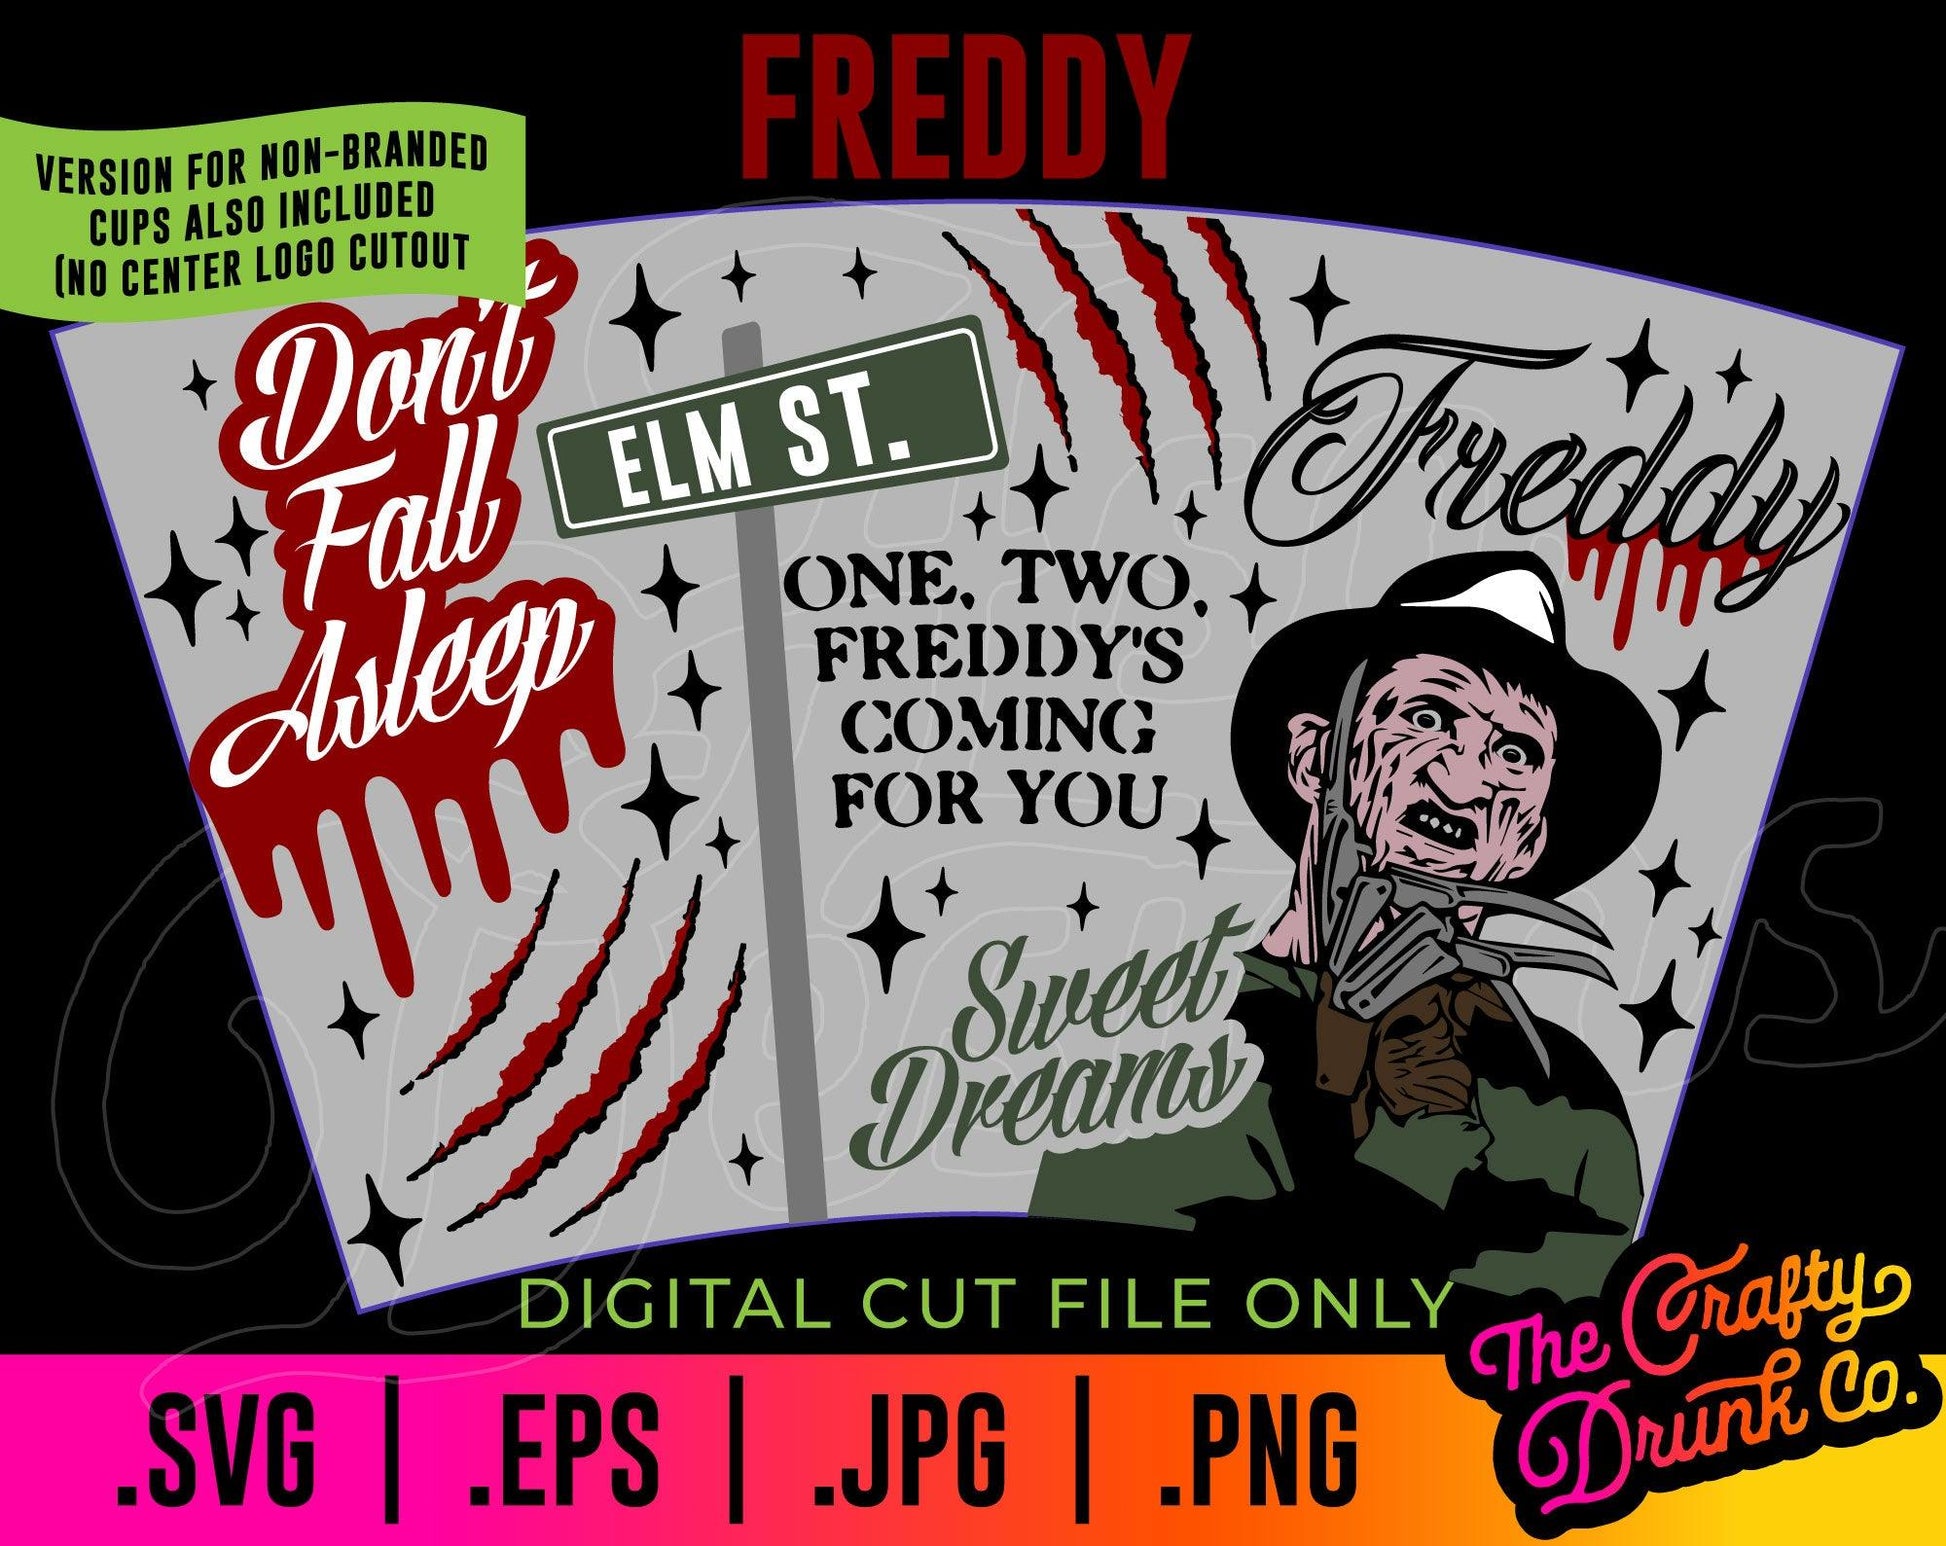 Freddy Cold Cup Wrap - TheCraftyDrunkCo